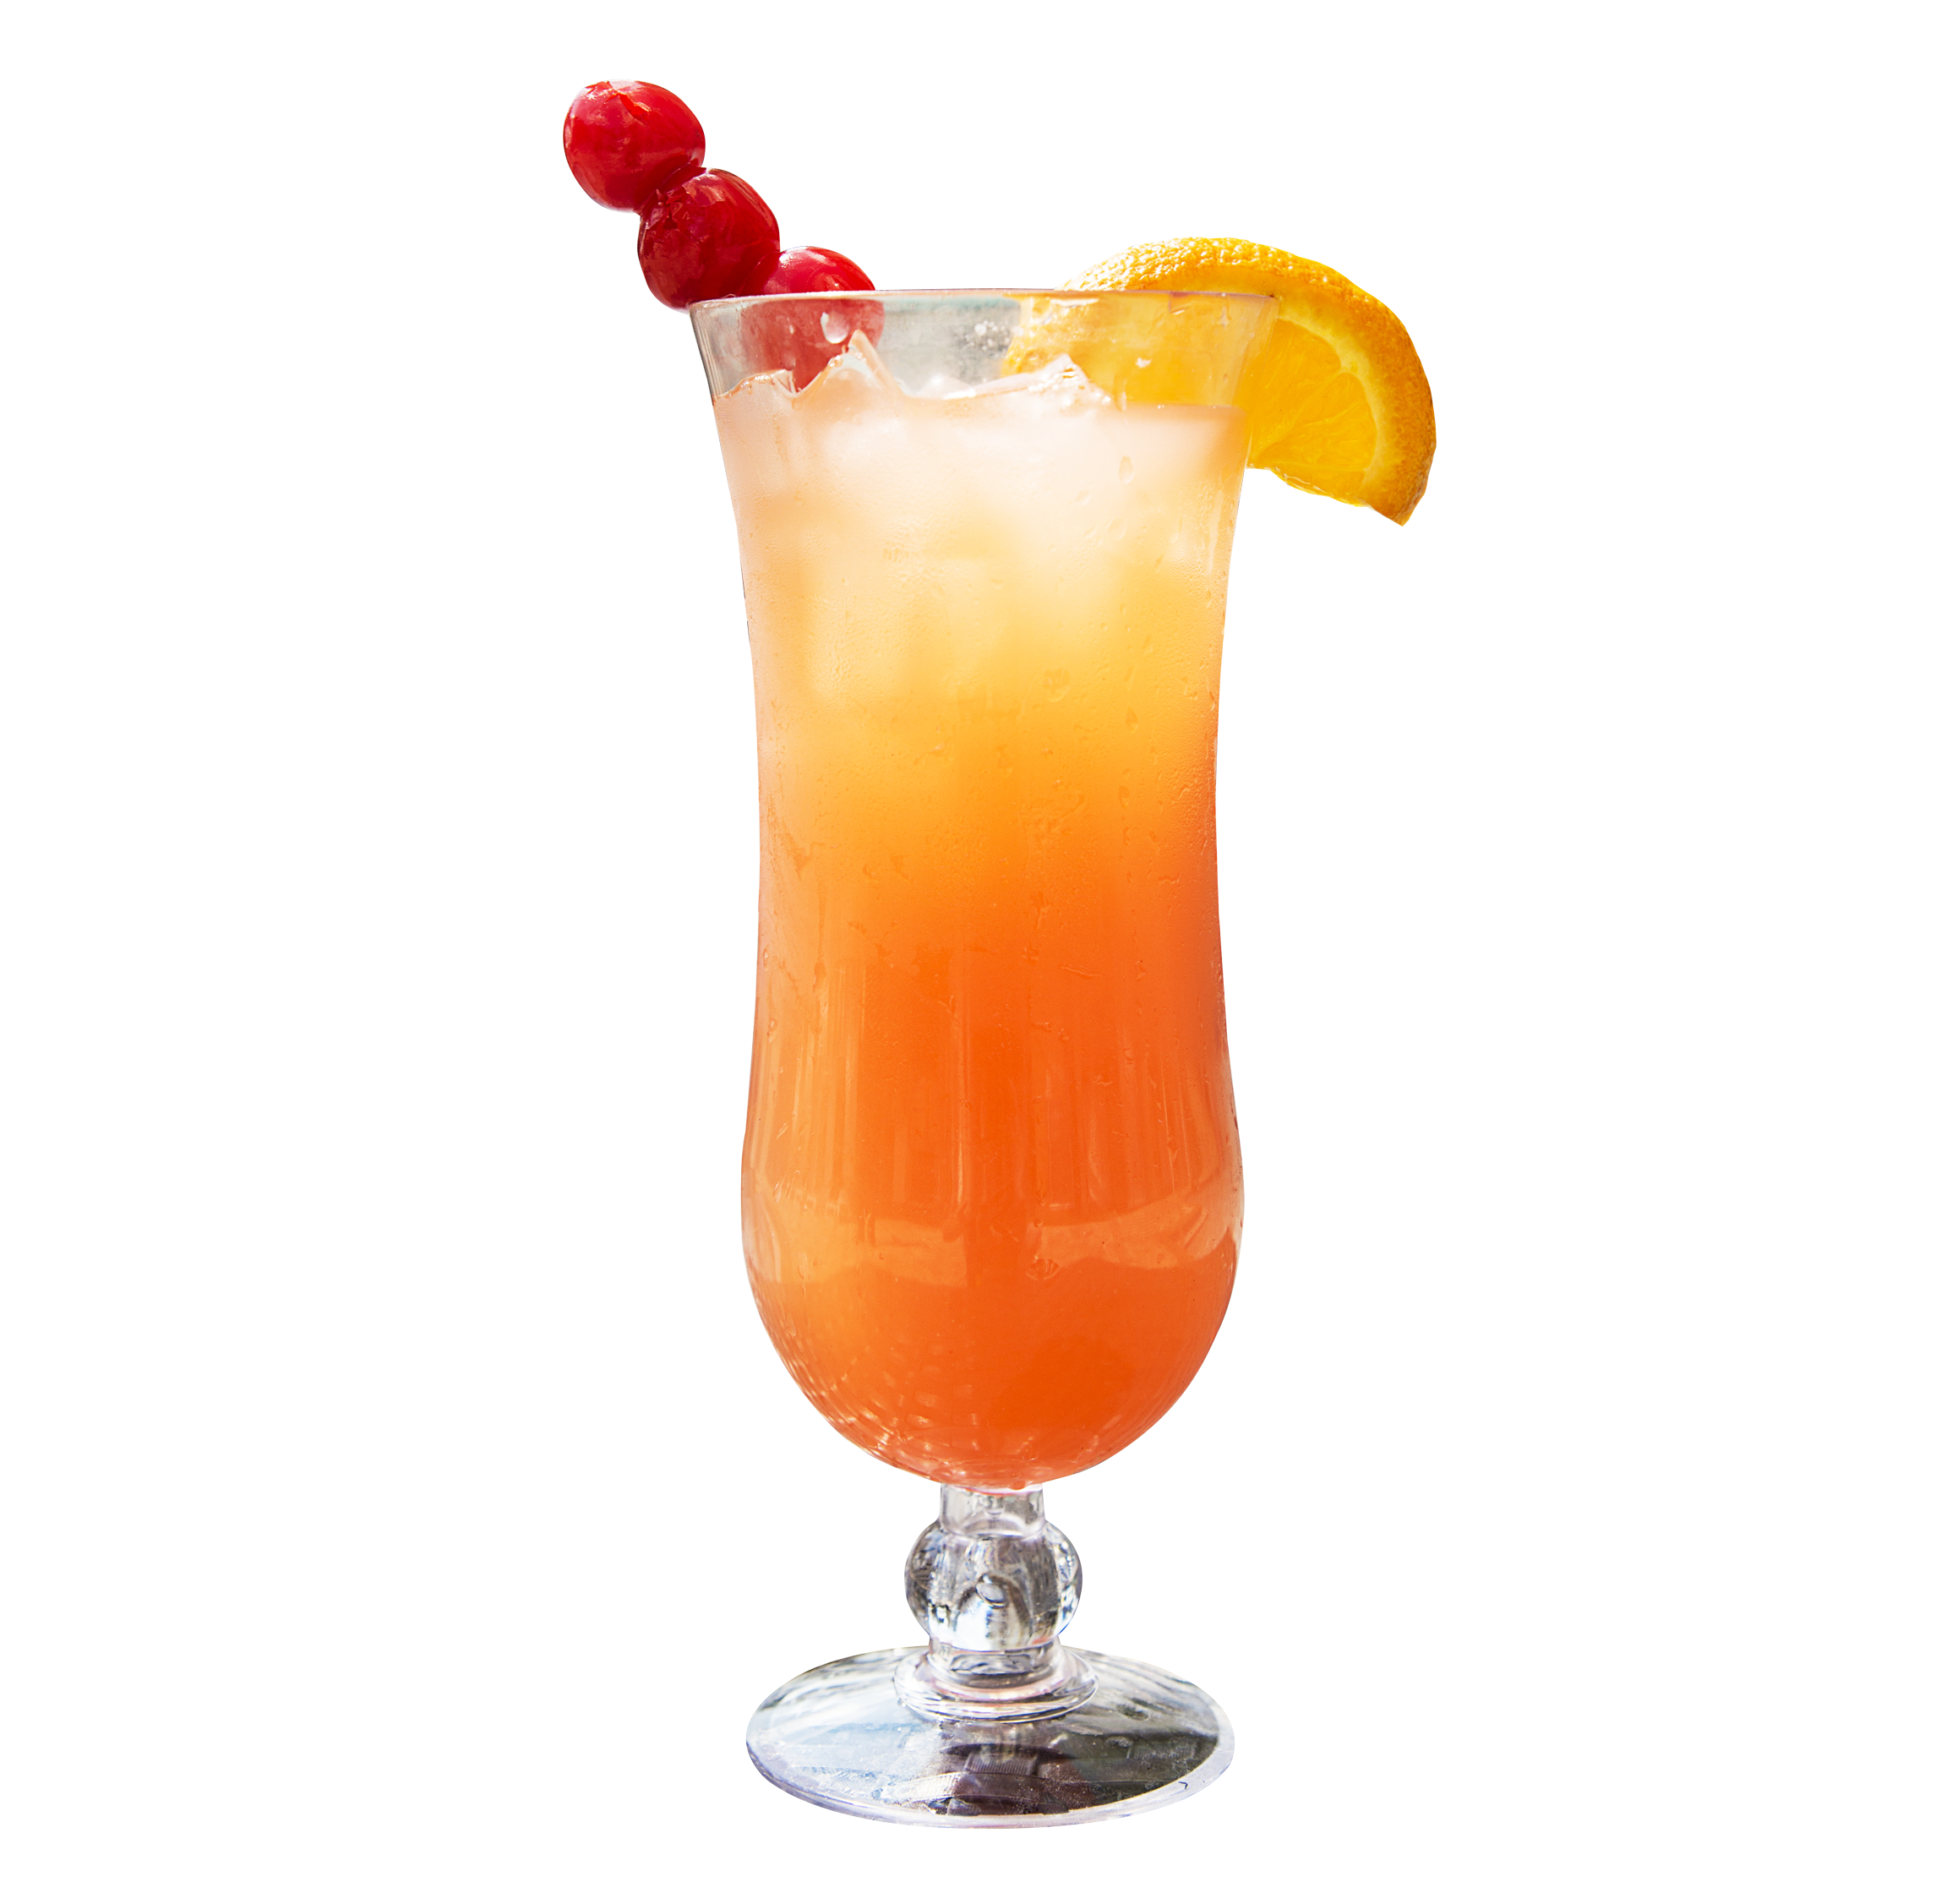 A Glass With Orange Liquid And Fruit Garnish